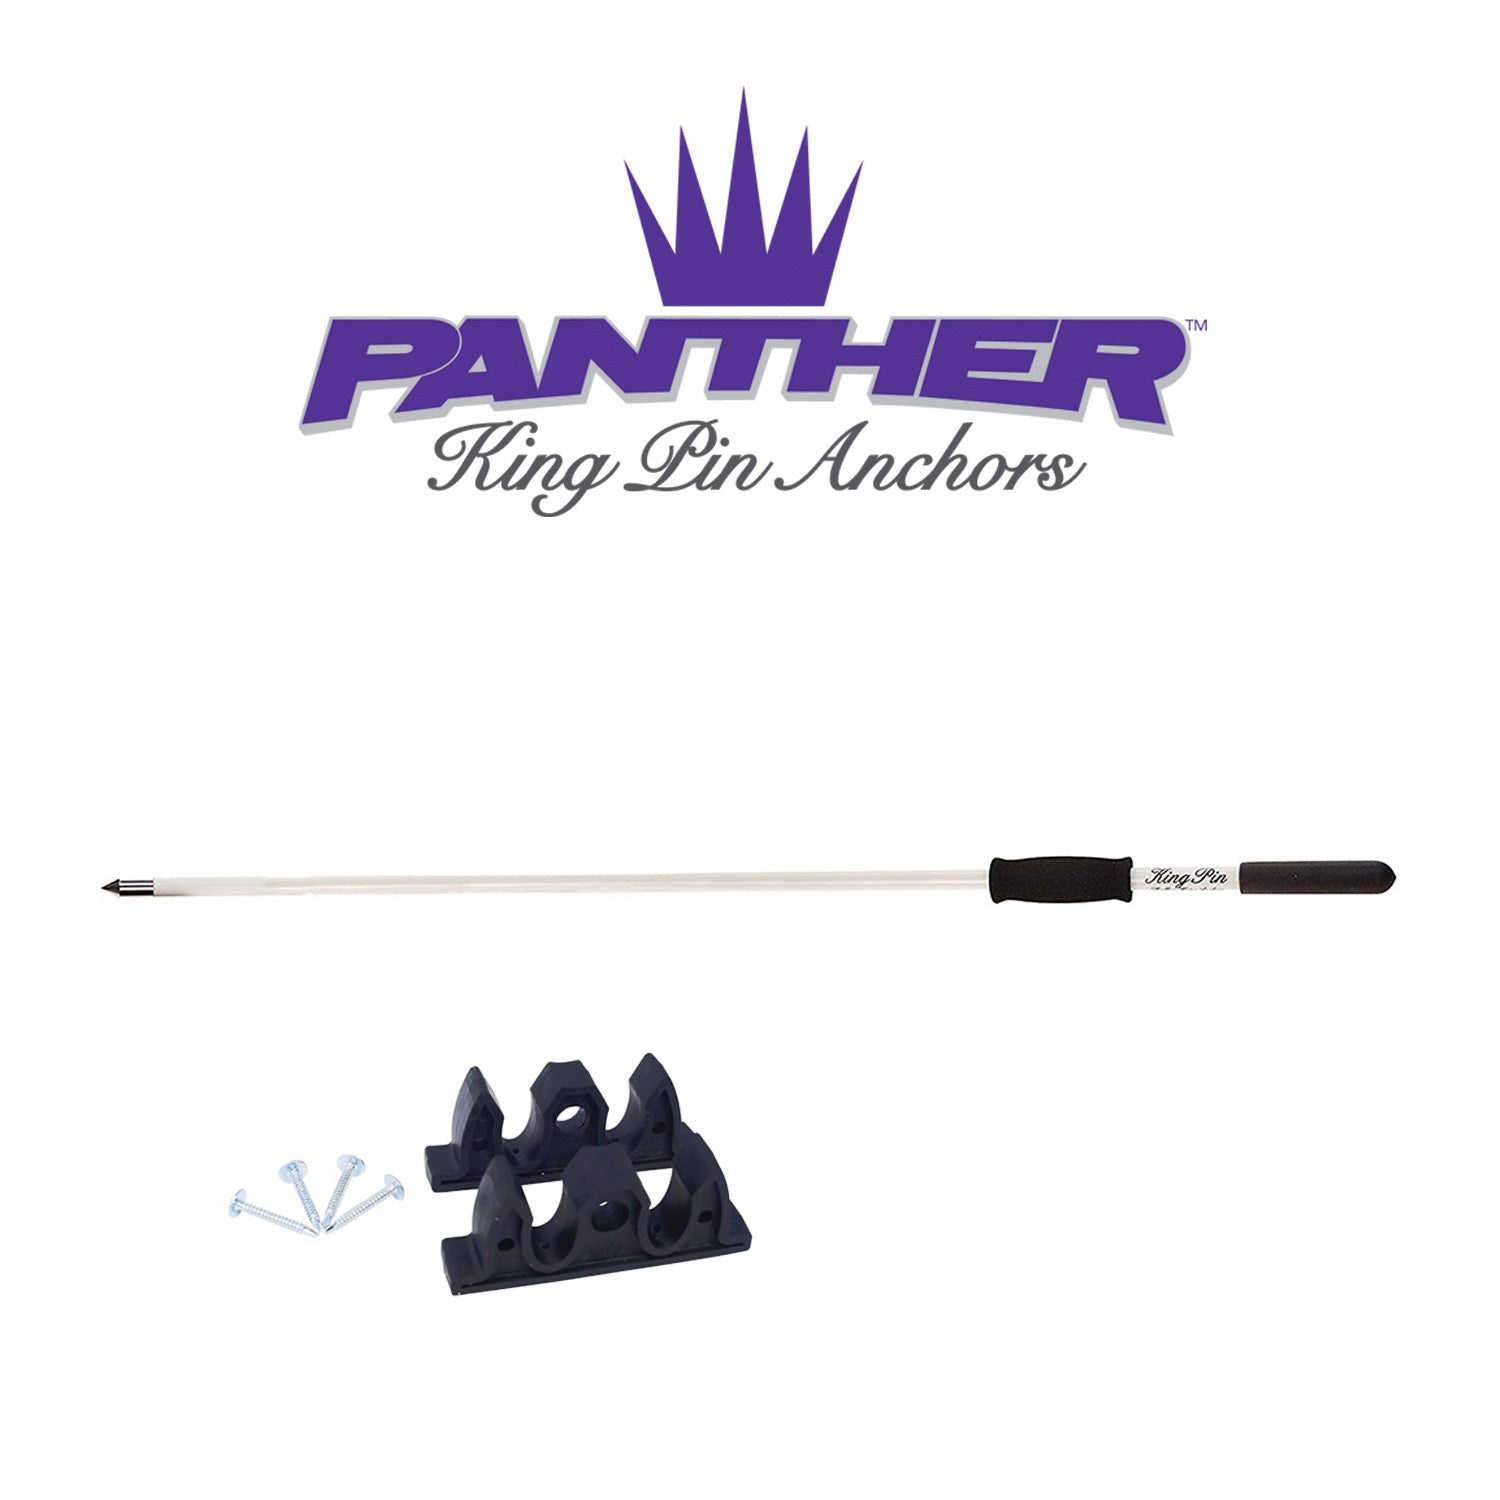 Panther King Pin 8ft Anchor Pole, White - 1 pc